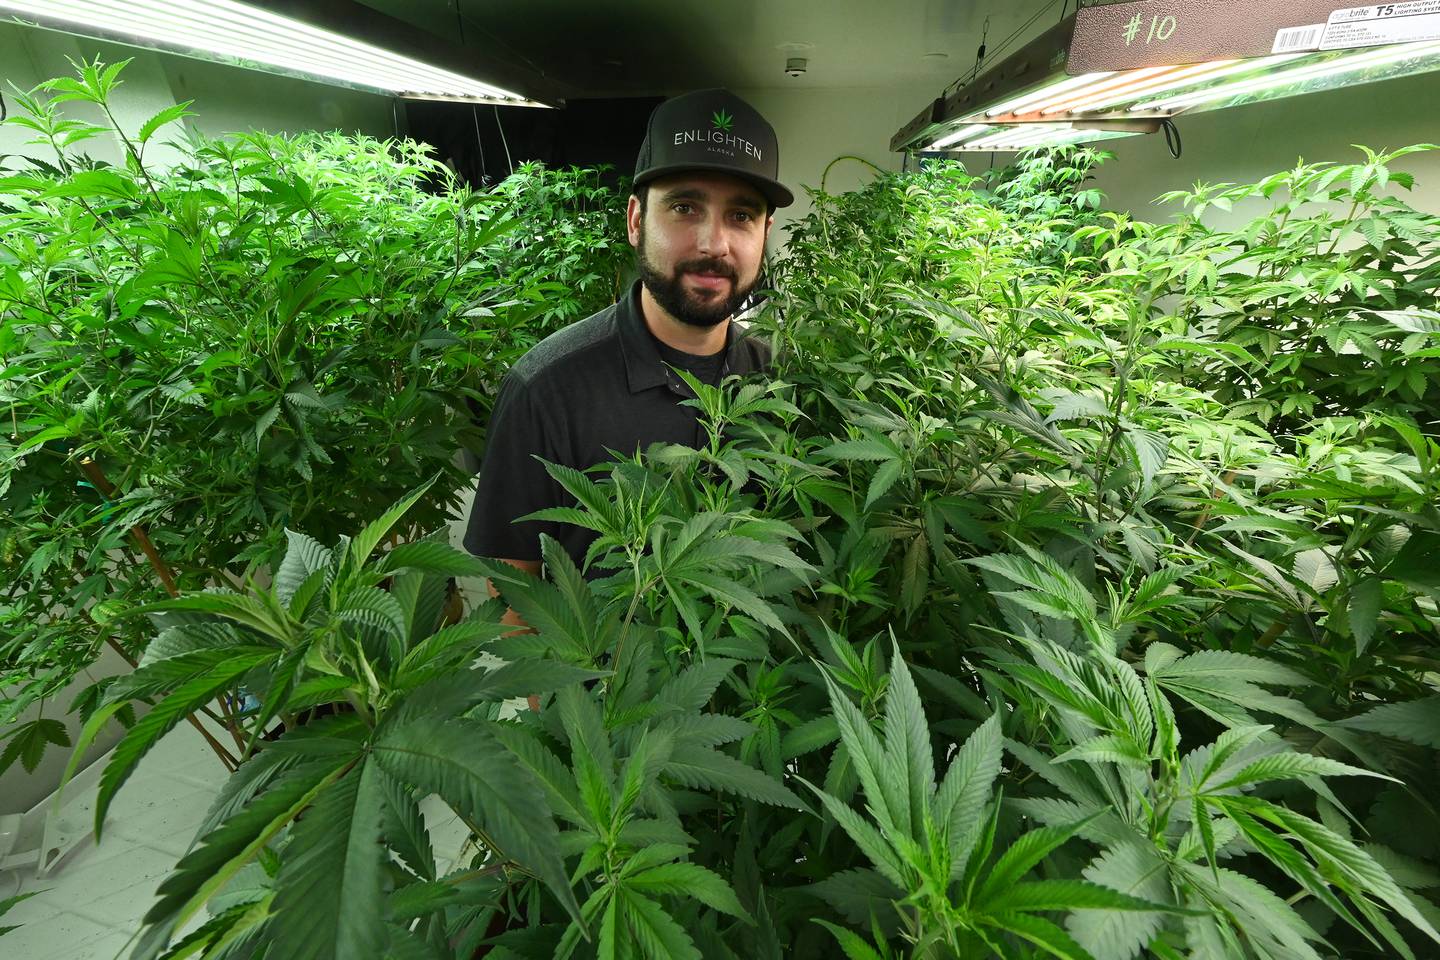 Enlighten Alaska cannabis cultivation facility 